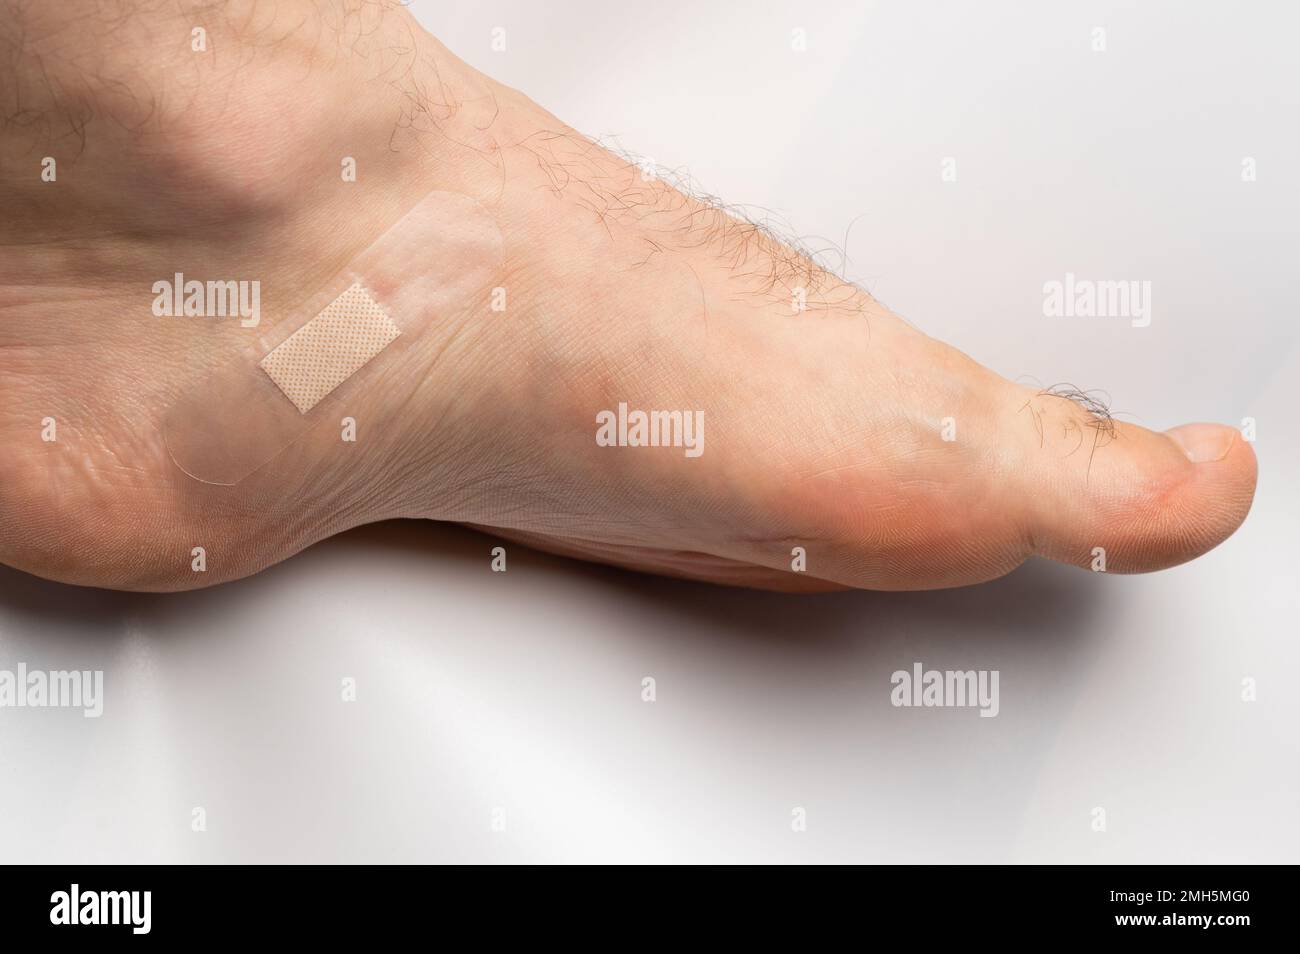 Bendaggio medico sulla gamba umana isolato su sfondo bianco studio vista ravvicinata Foto Stock